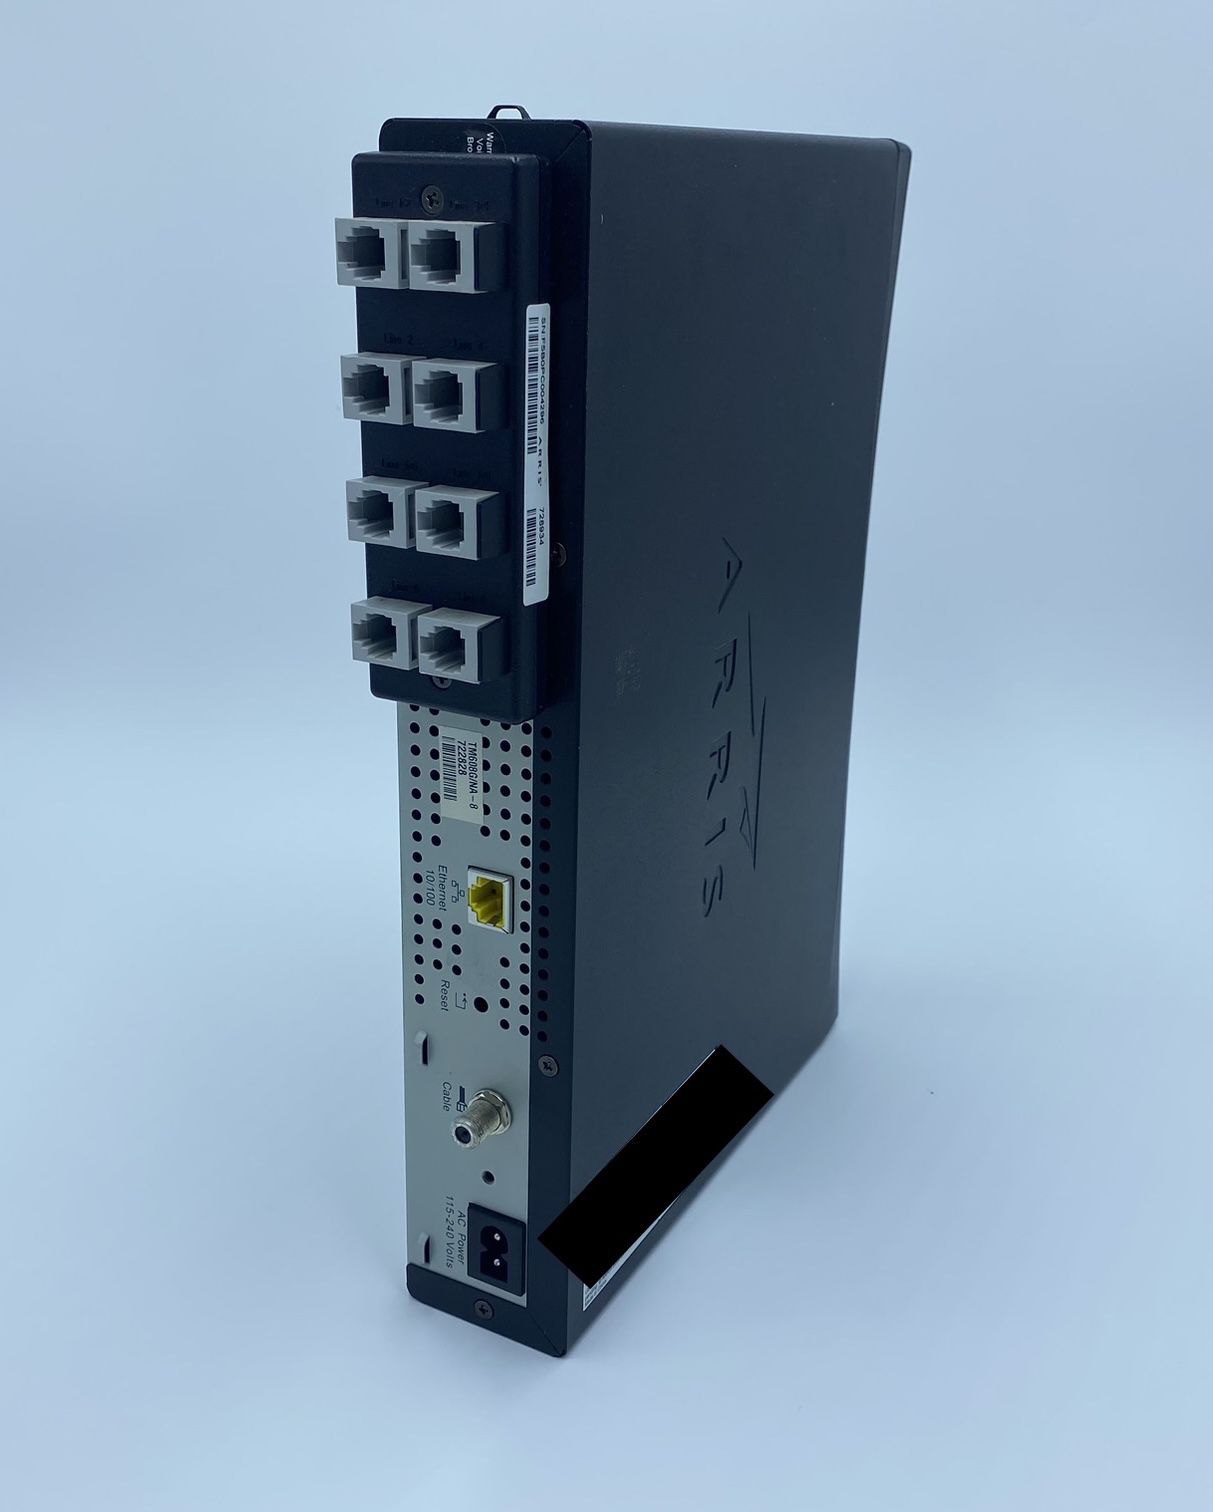 Arris TM608G | Docsis 2.0 Telephony Cable Modem